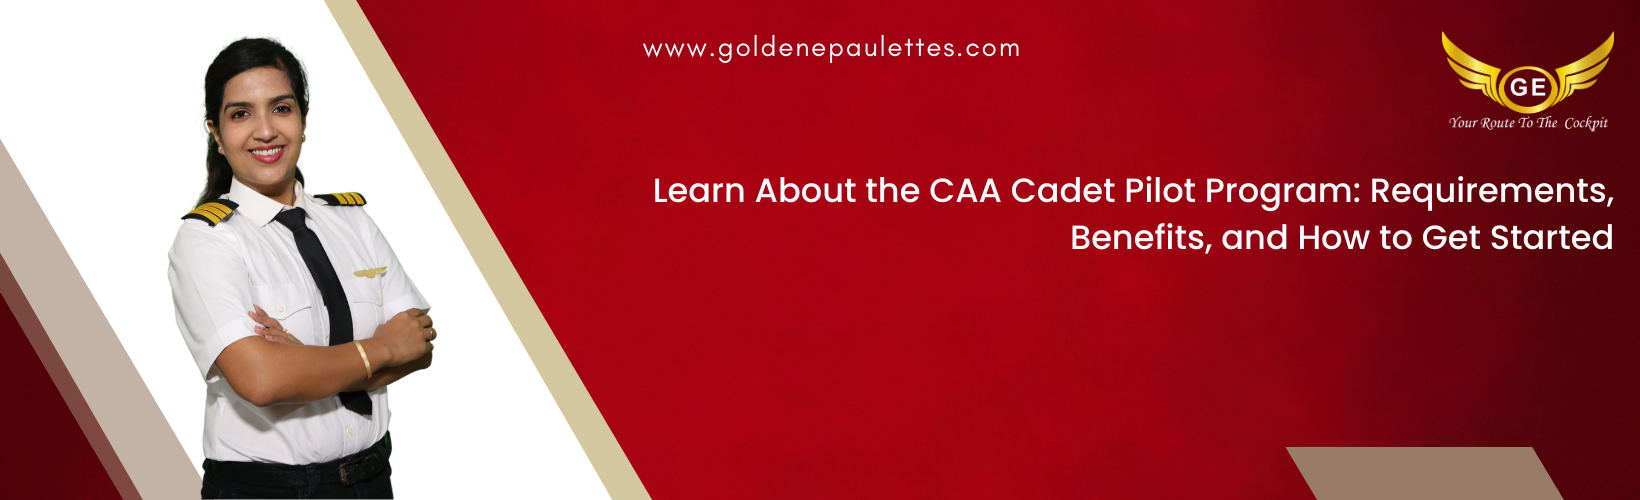 Introduction to the CAA Cadet Pilot Program